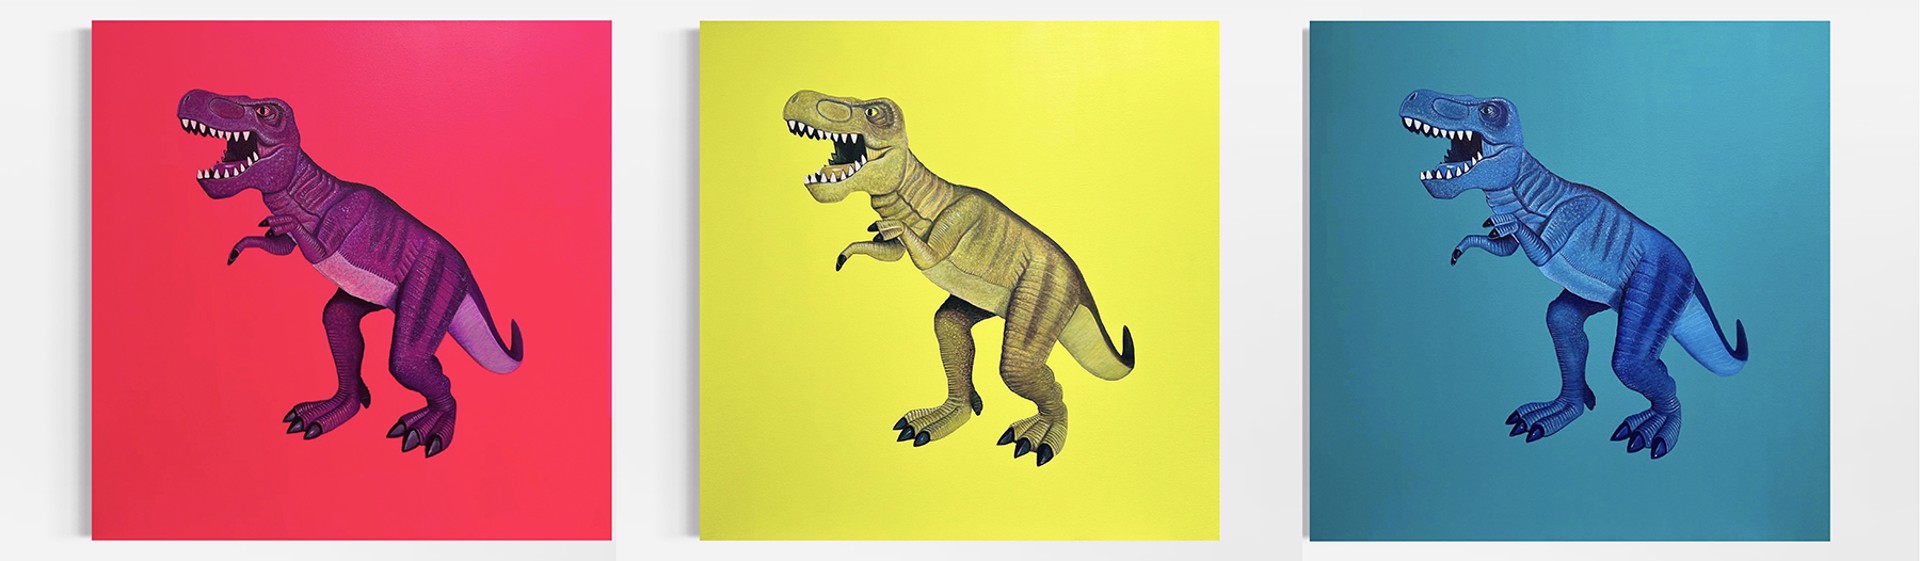 Triad Rex by Colleen Critcher